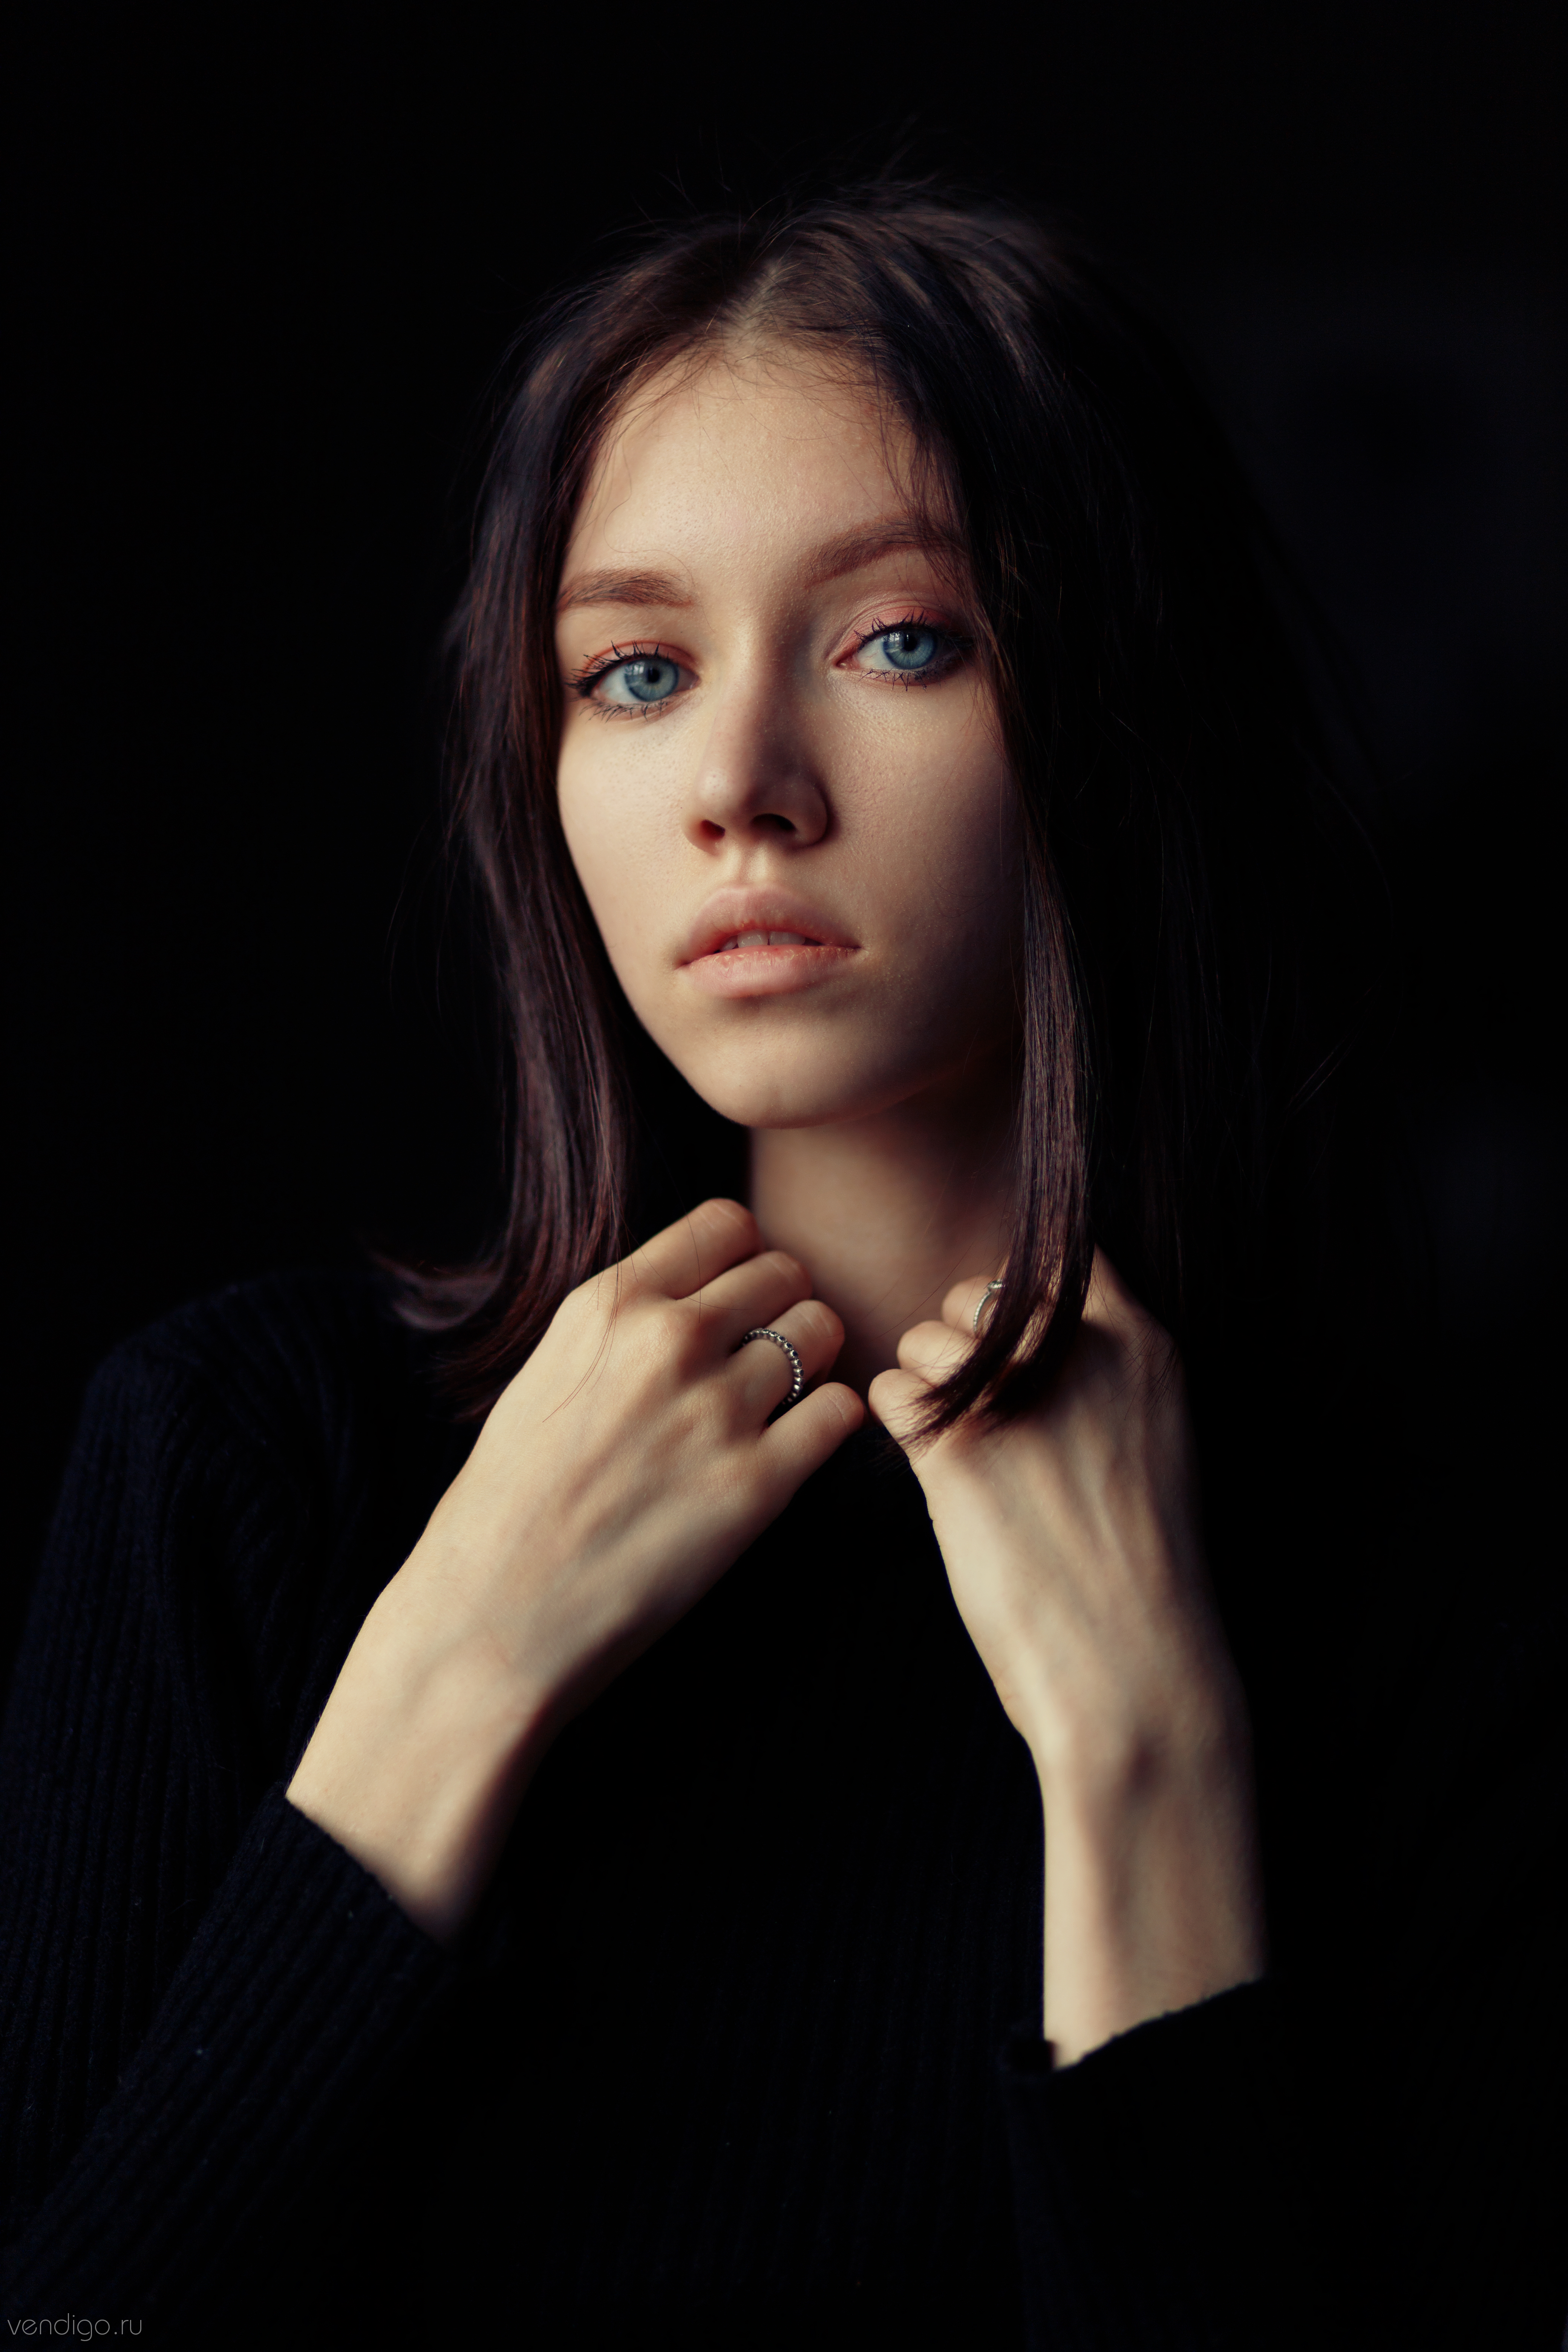 Evgeniy Bulatov Women Brunette Blue Eyes Black Clothing Portrait Parted Lips 4160x6240